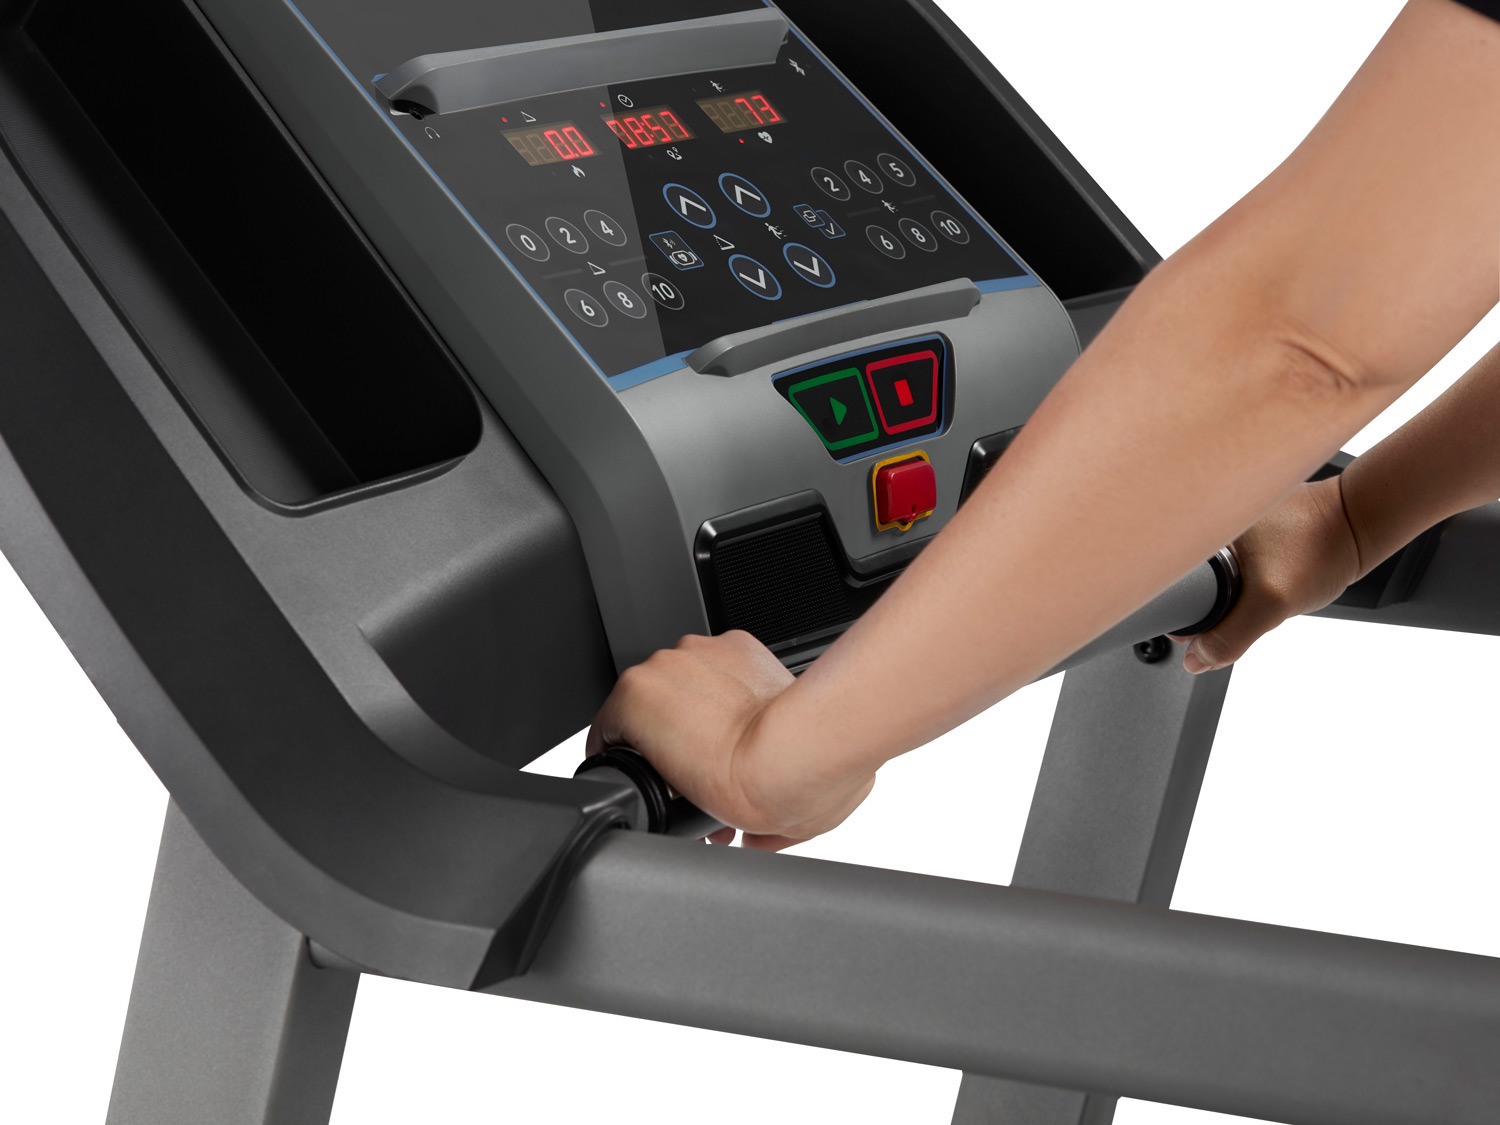 Horizon Fitness Laufband »eTR 5.0« online kaufen | LIDL